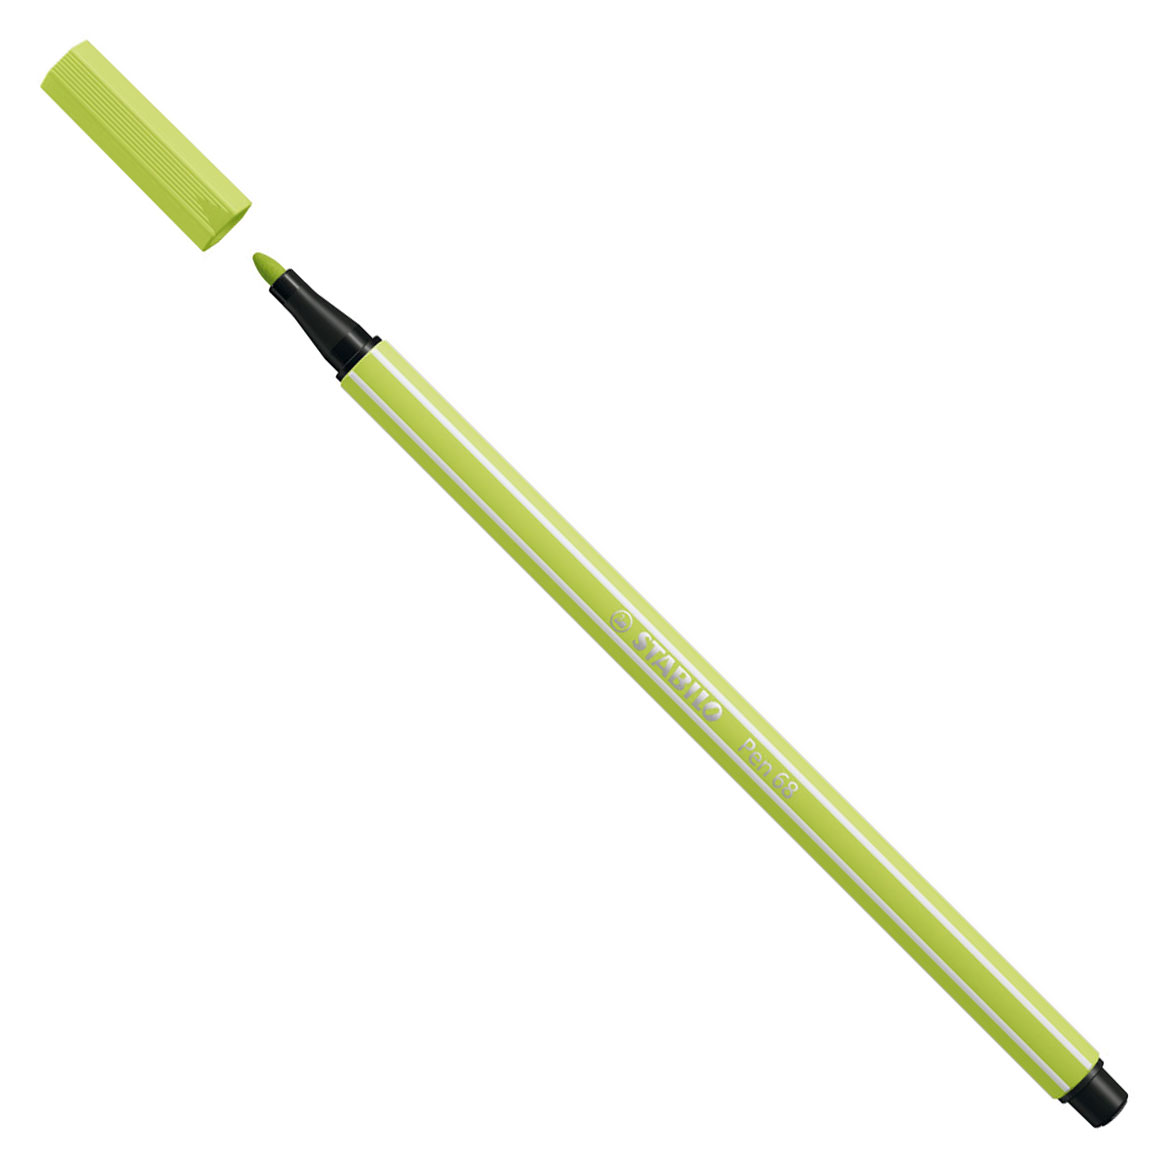 STABILO Pen 68 - Viltstift - Lime Groen (68/14)